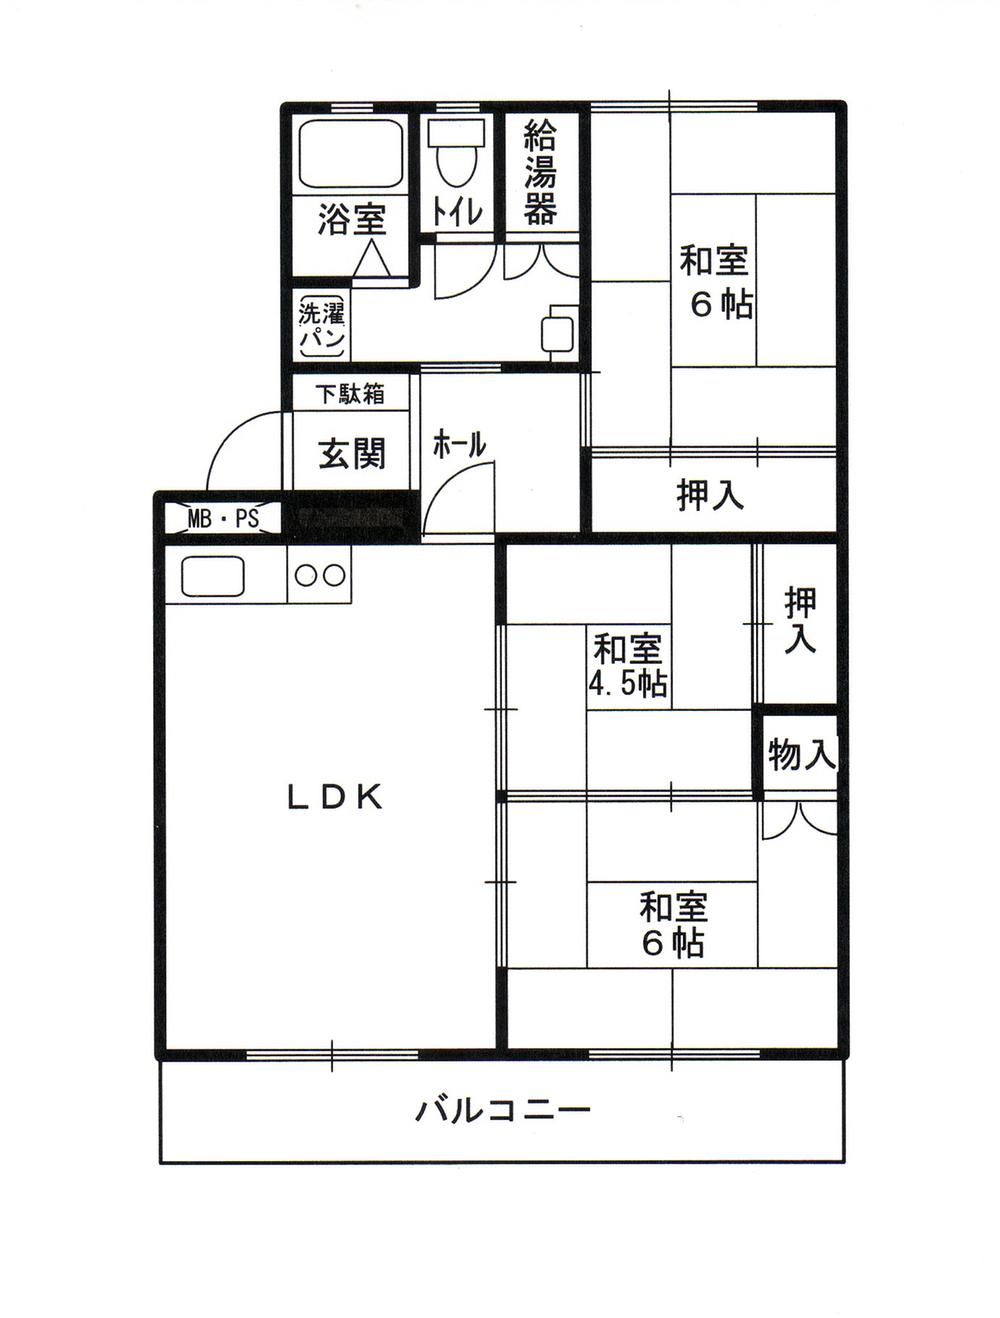 Floor plan. 3LDK, Price 3.5 million yen, Occupied area 62.77 sq m , Balcony area 6.4 sq m